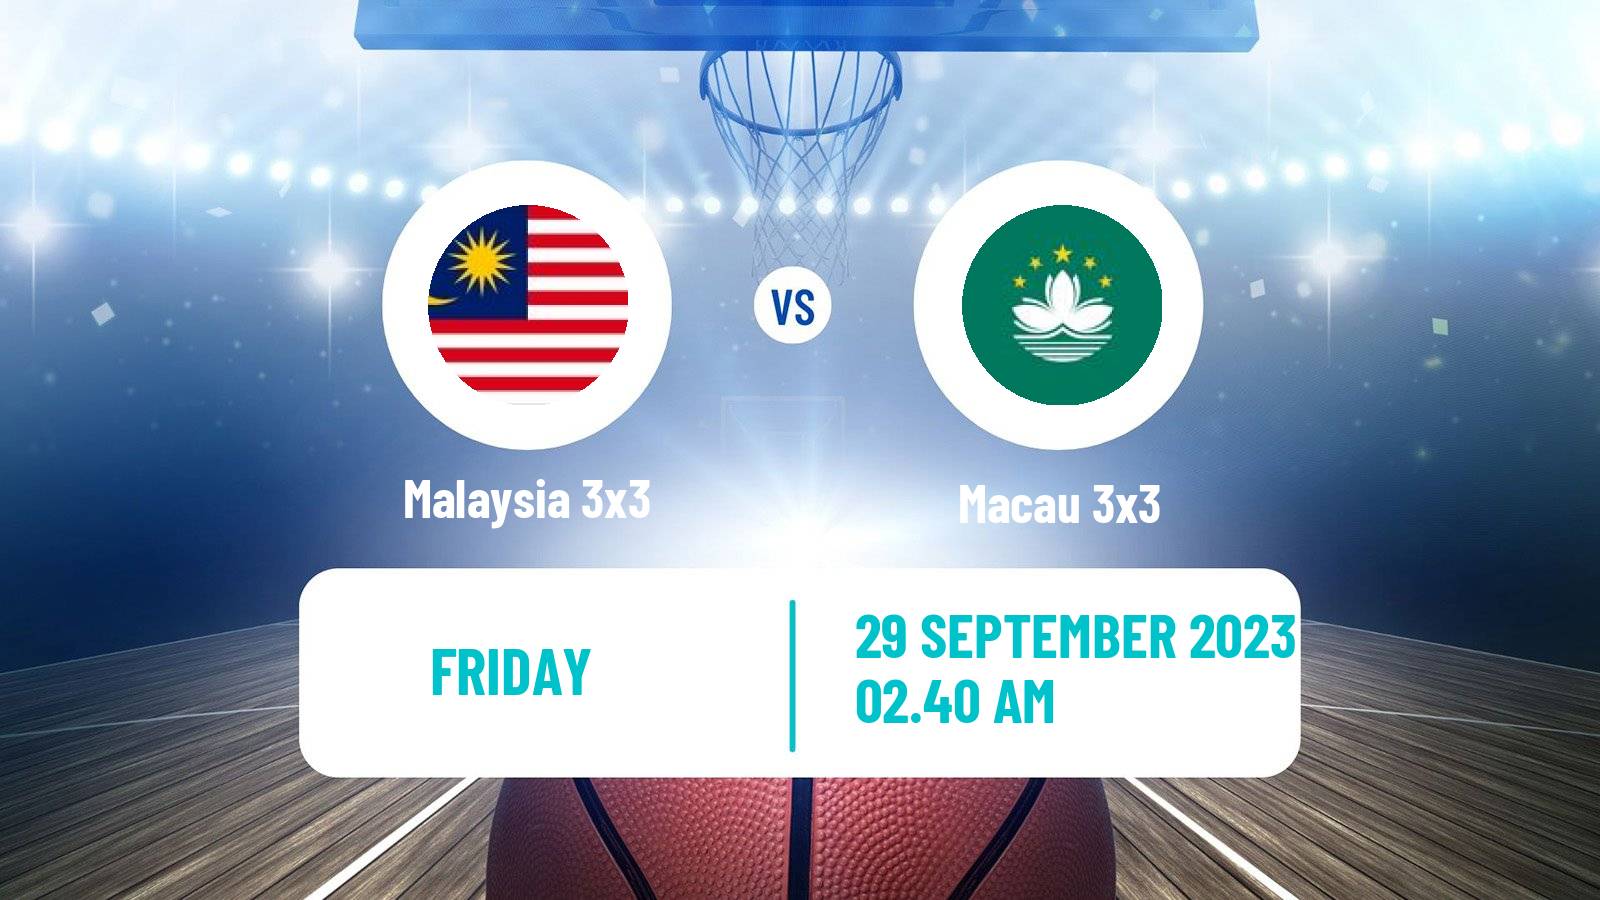 Basketball Asian Games Basketball 3x3 Malaysia 3x3 - Macau 3x3